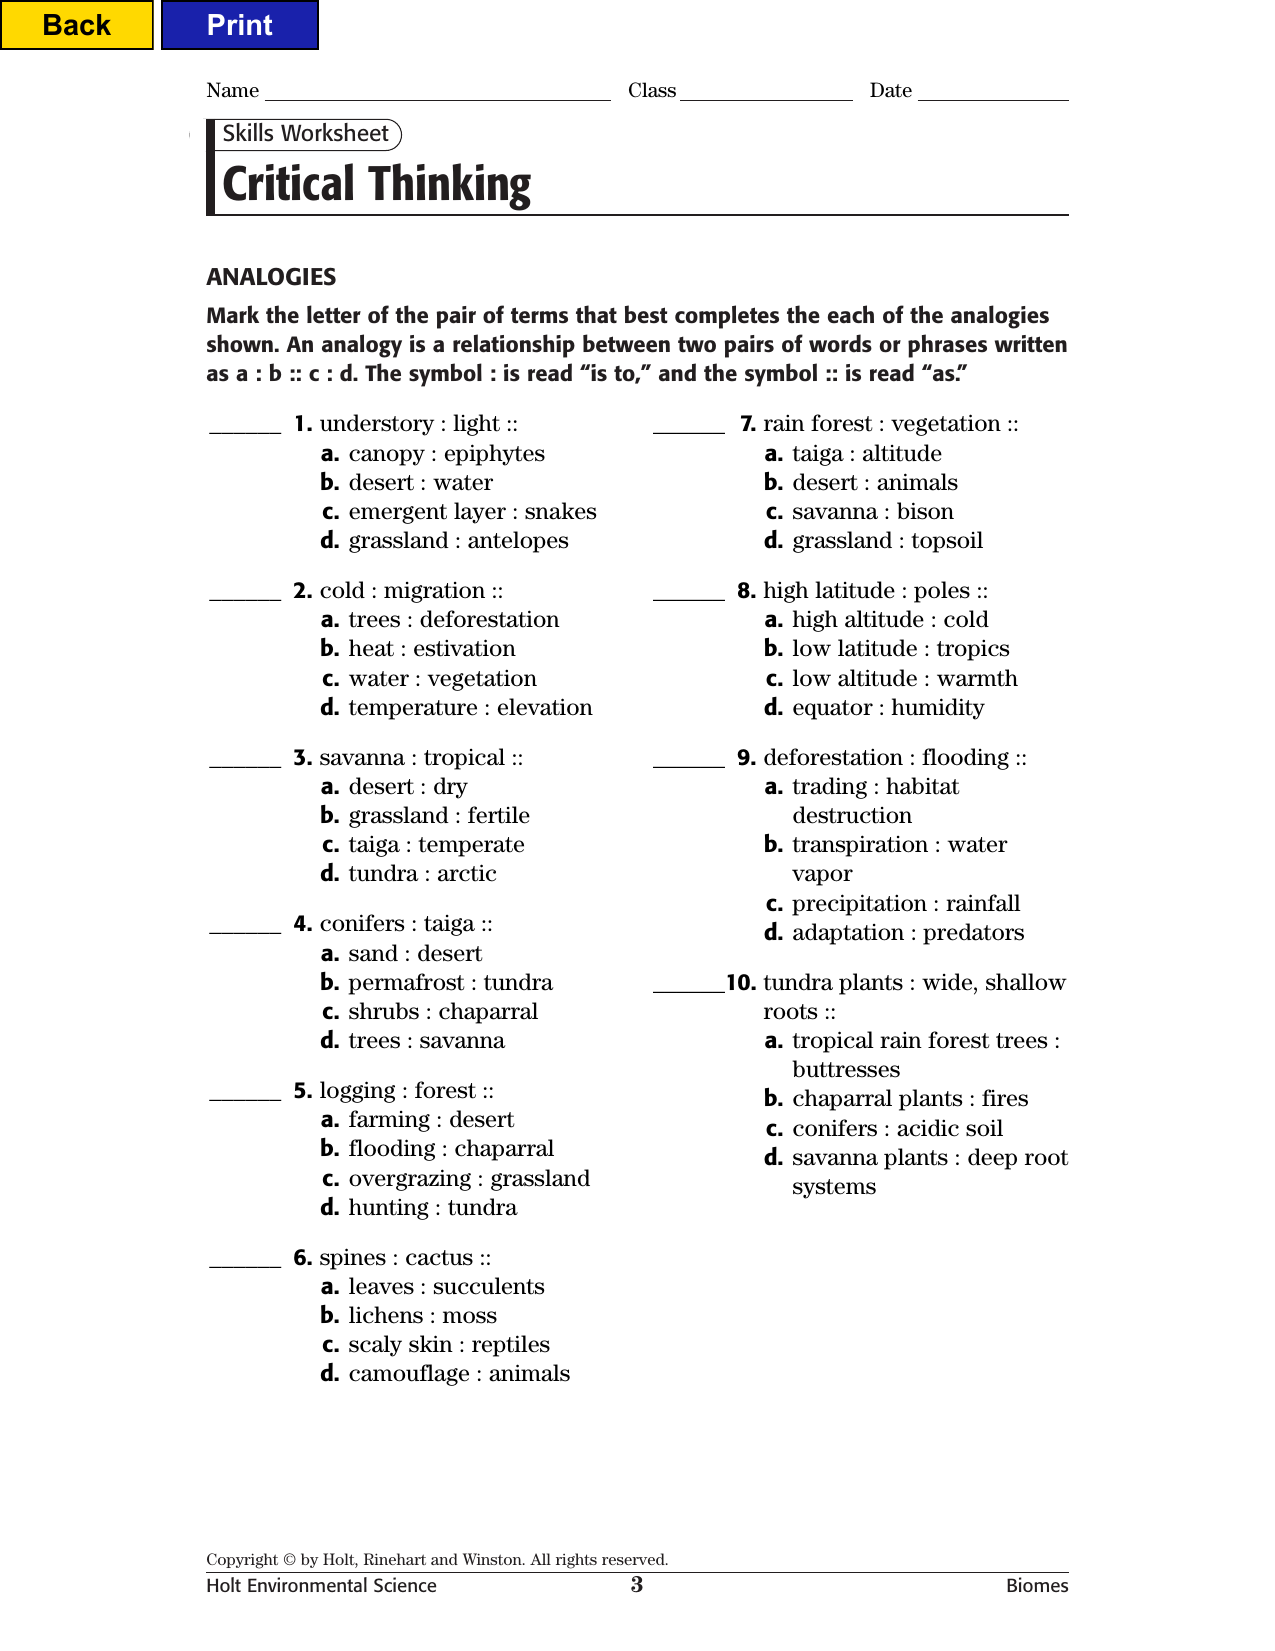 Skills Worksheet Critical Thinking - Promotiontablecovers With Regard To Critical Thinking Skills Worksheet